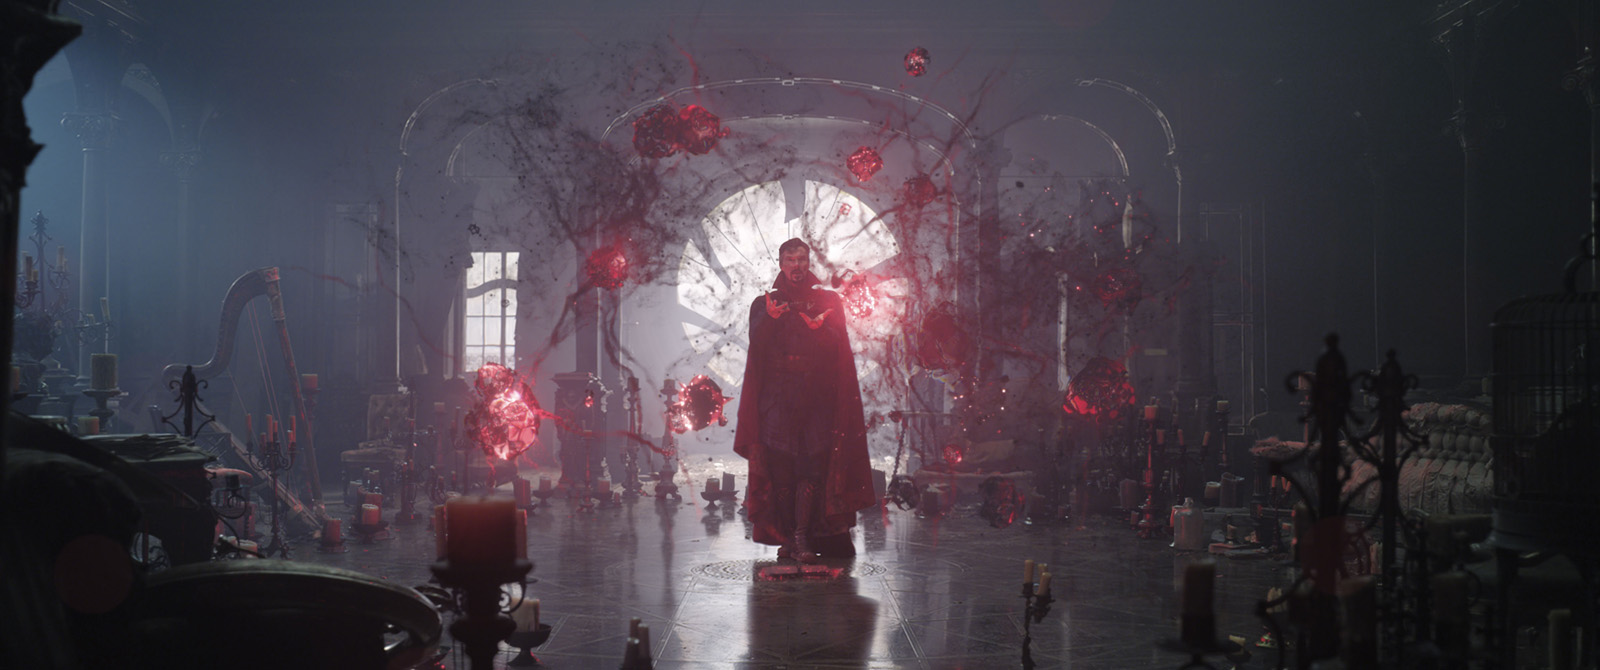 Szenenbild 2 vom Film Doctor Strange in the Multiverse of Madness